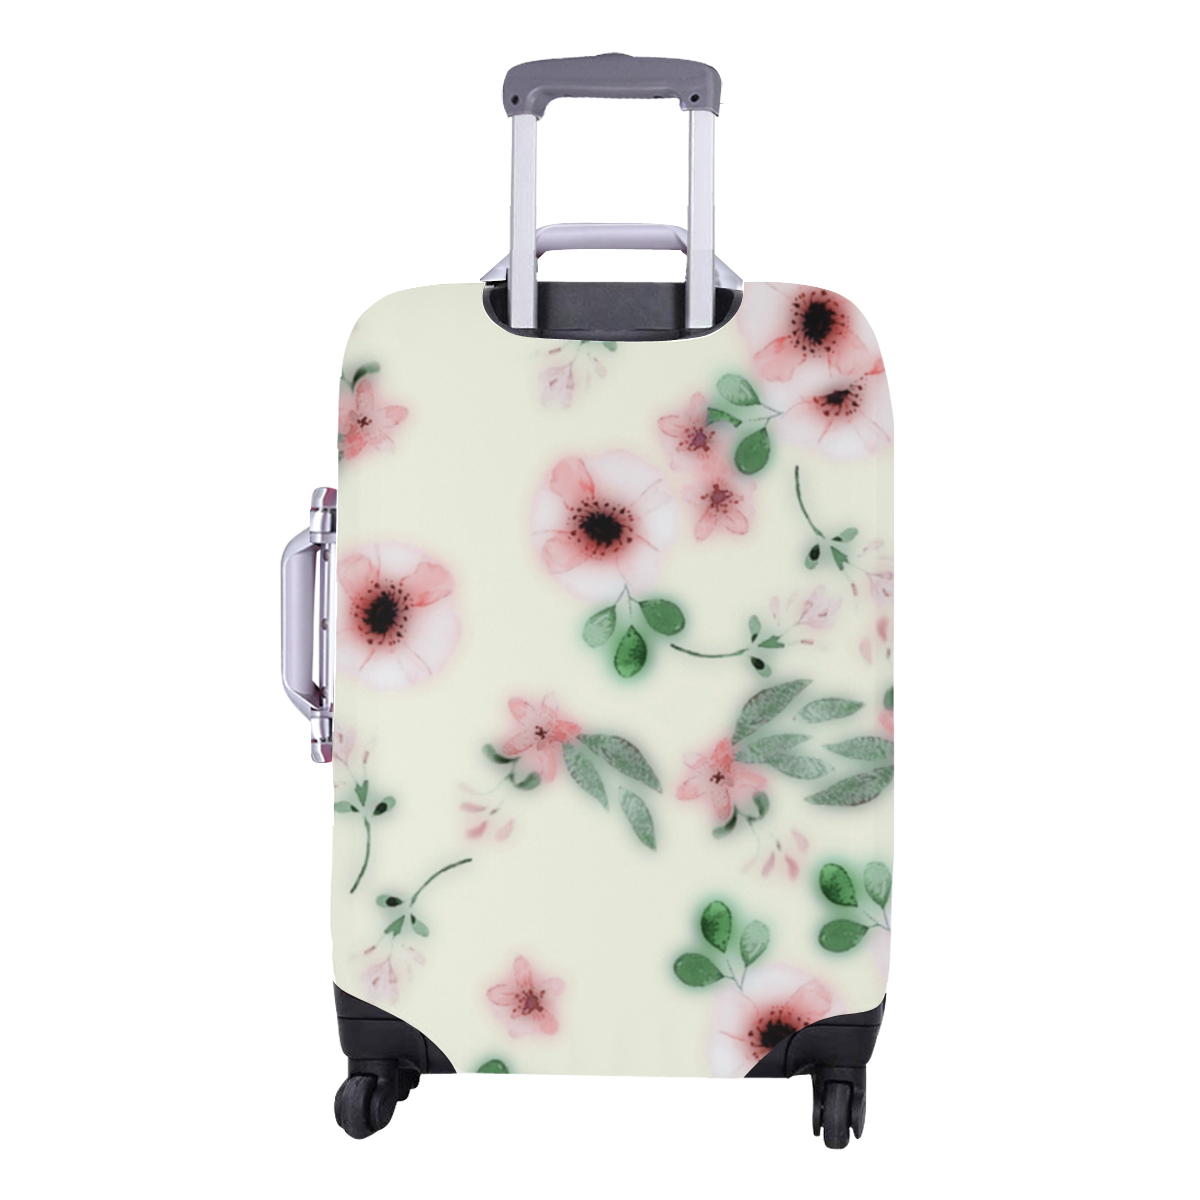 Annabellerockz-flower-suitcase Luggage Cover/Medium 22"-25"